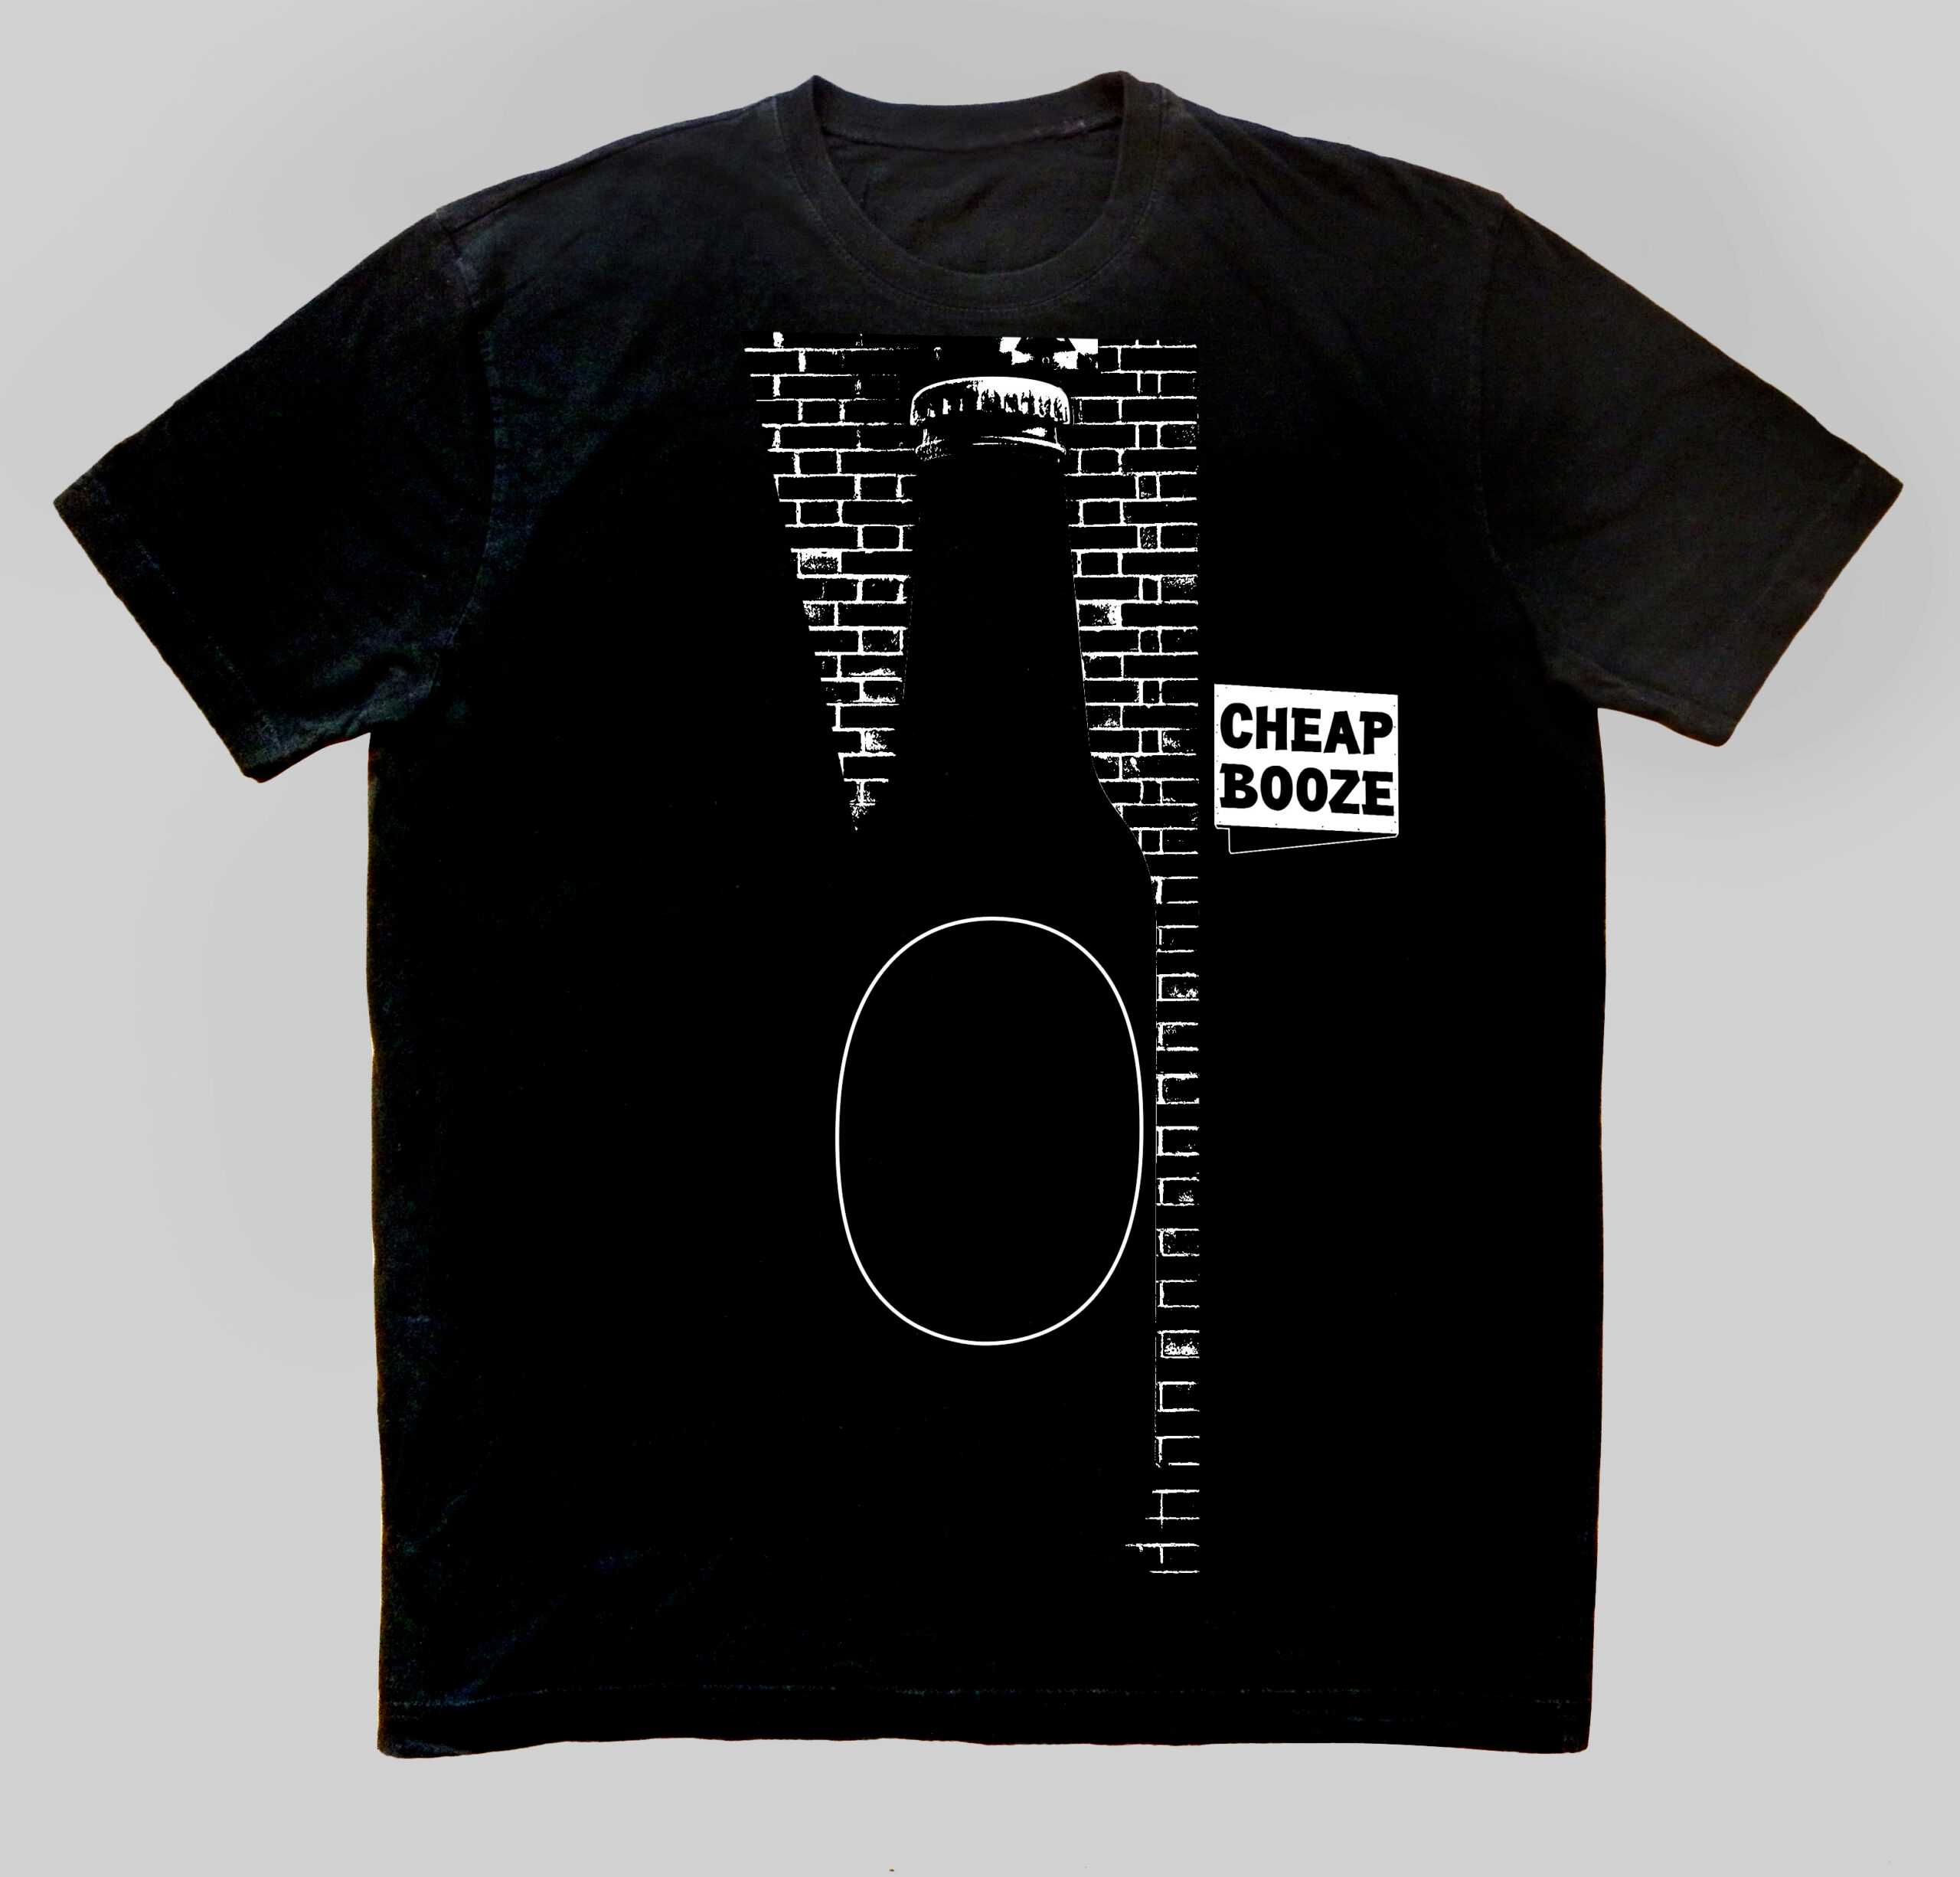 Cheap Booze T-Shirt: Variation – Outline.